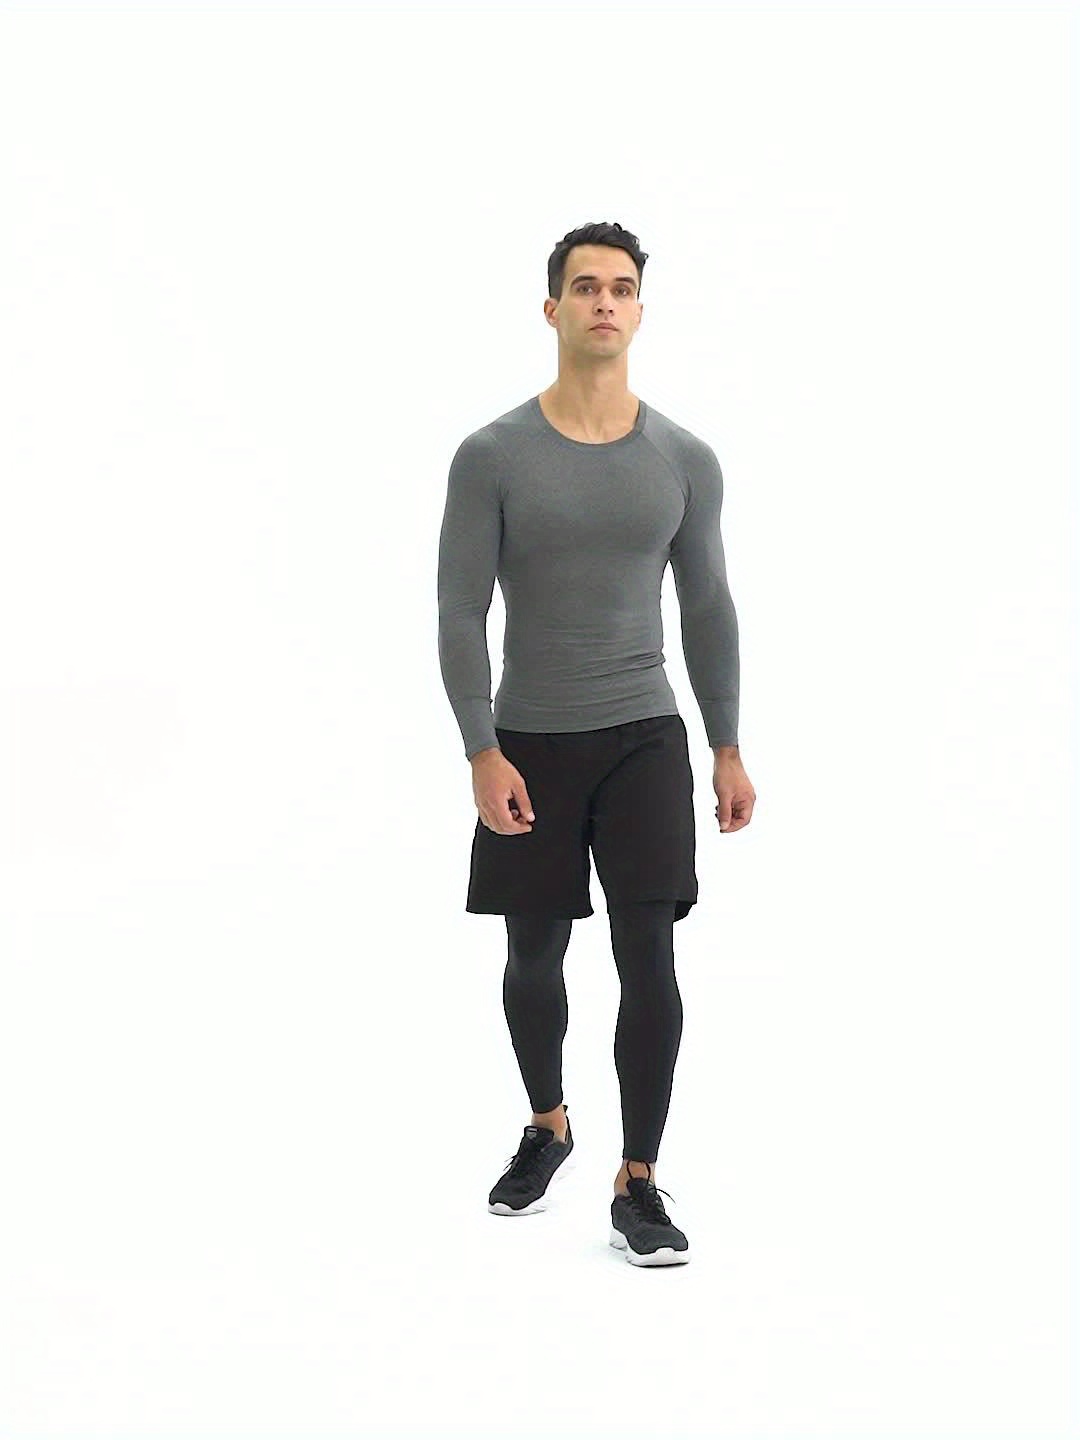 Camiseta ajustada de entrenamiento para correr para hombre, blusa de traje  de Fitness de secado rápido de manga larga para deportes al aire libre  Pompotops oipoqjl53018